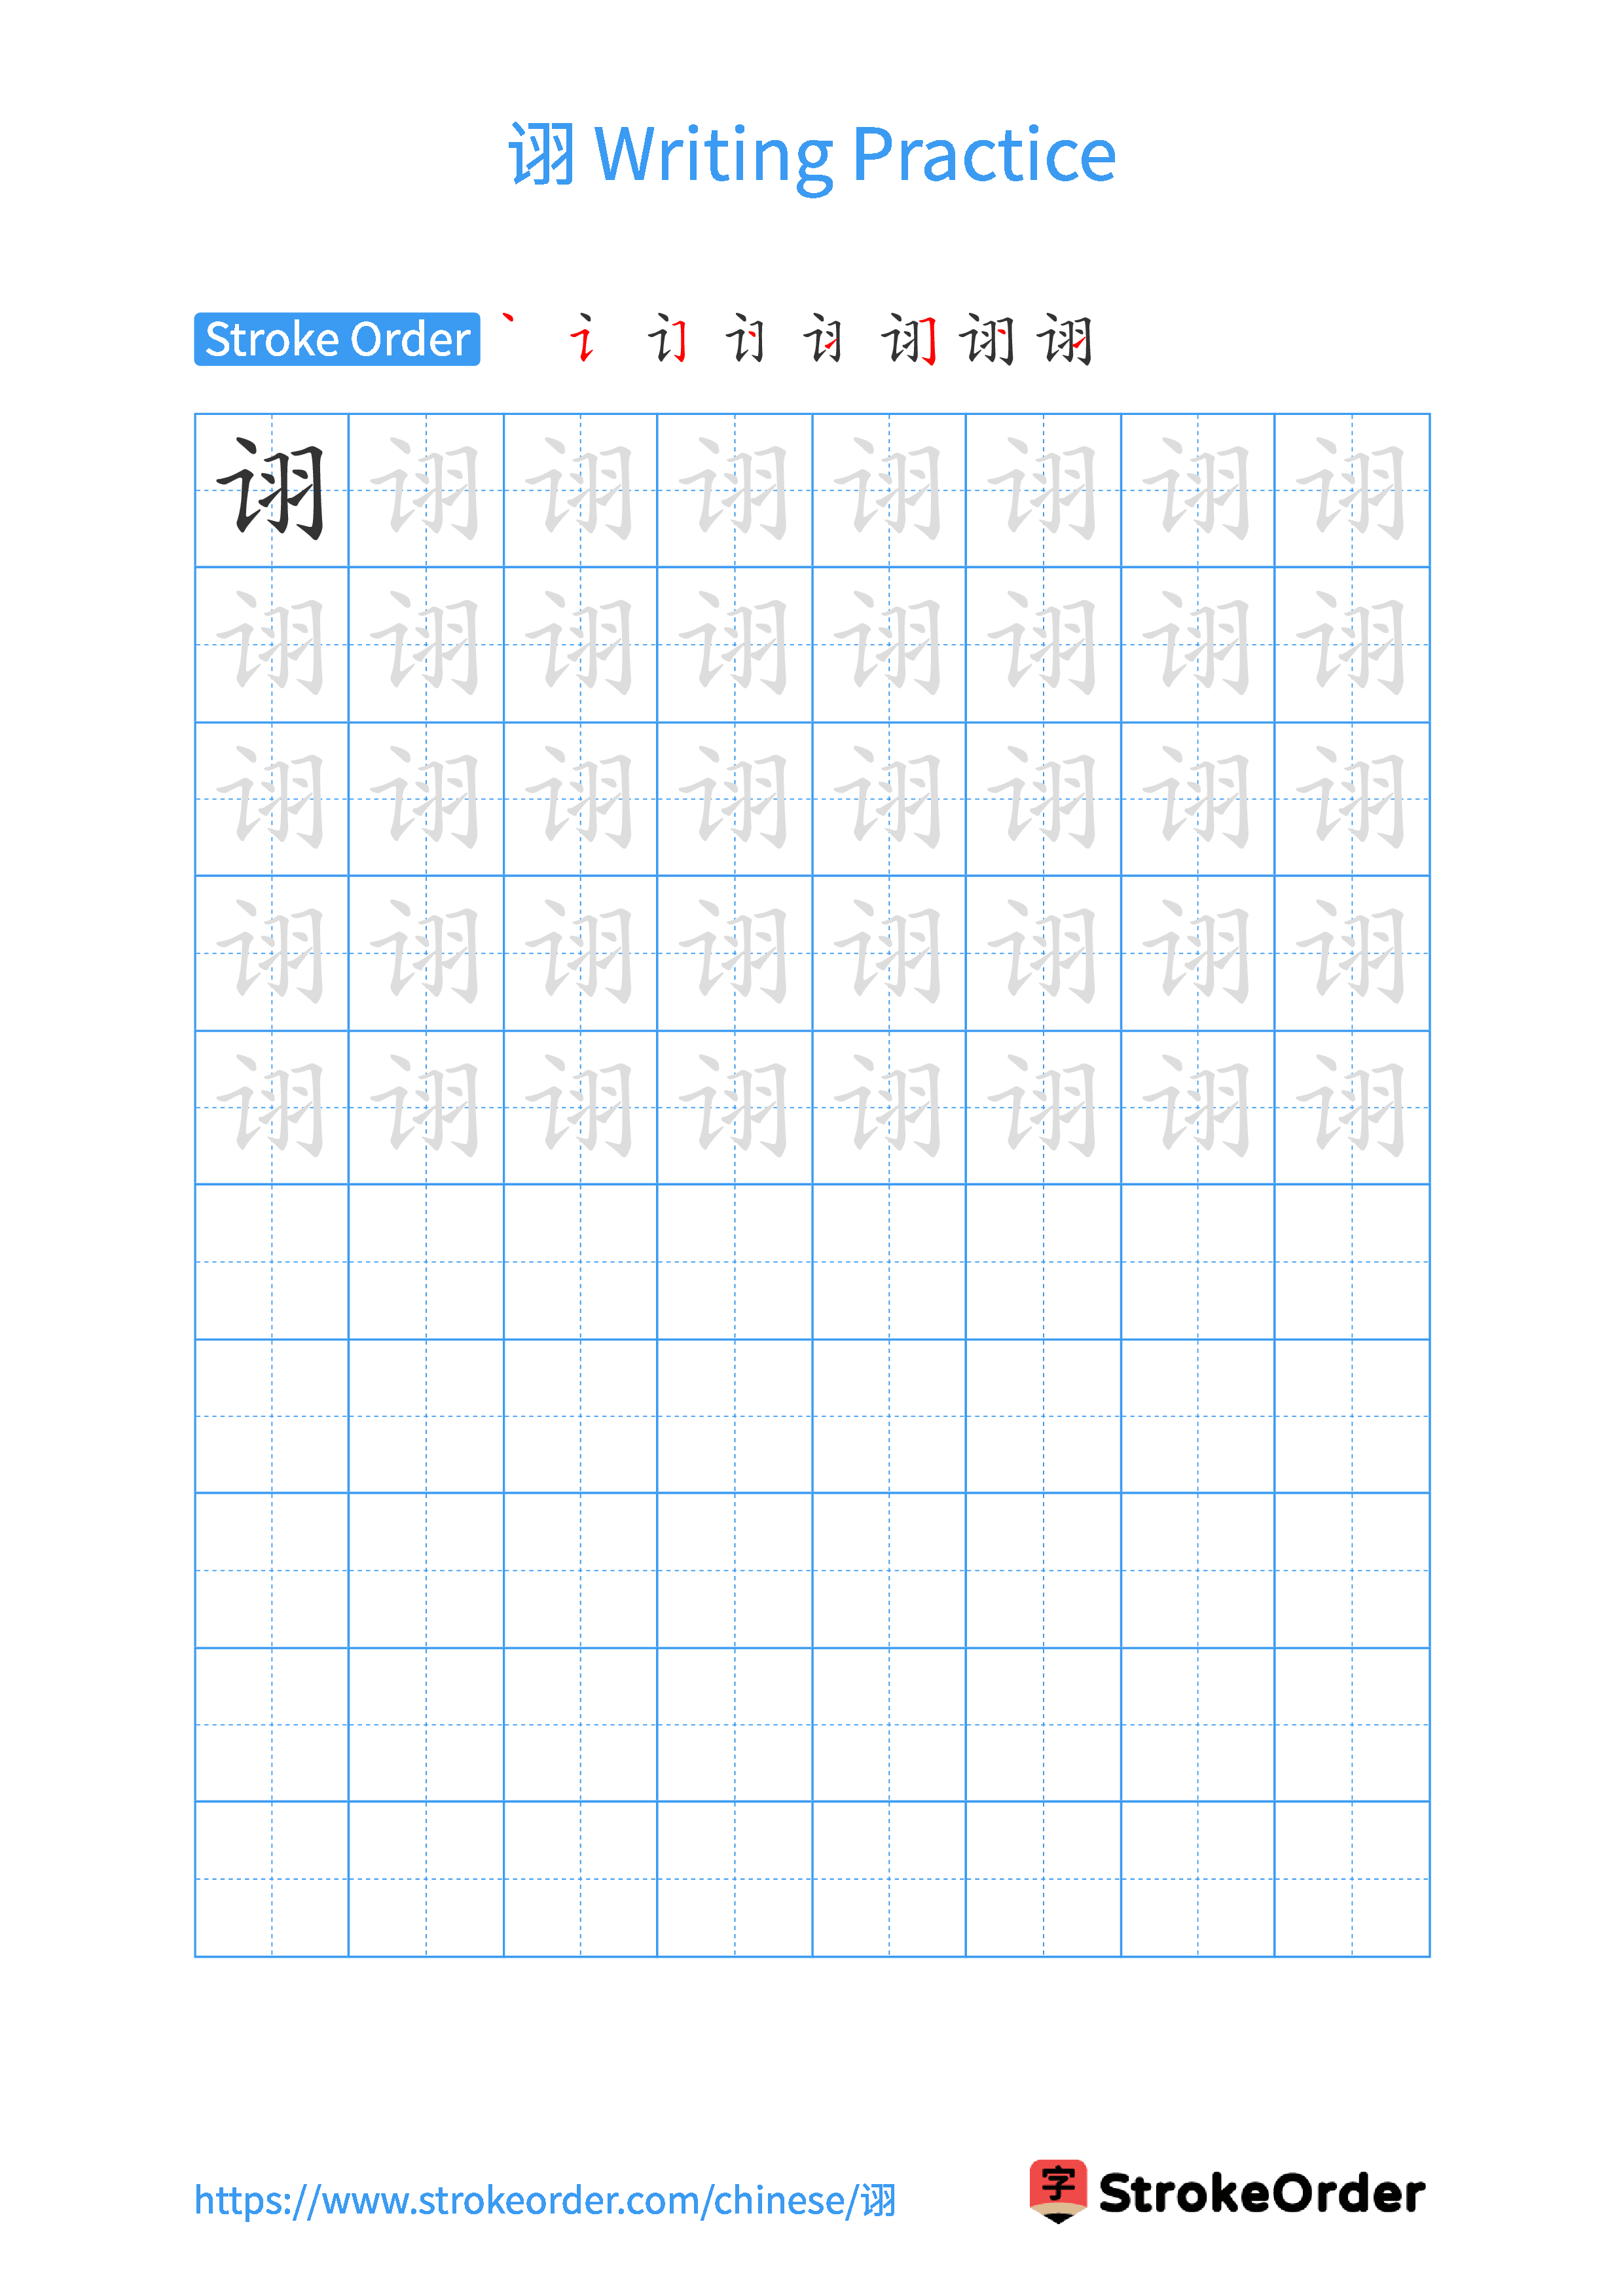 Printable Handwriting Practice Worksheet of the Chinese character 诩 in Portrait Orientation (Tian Zi Ge)